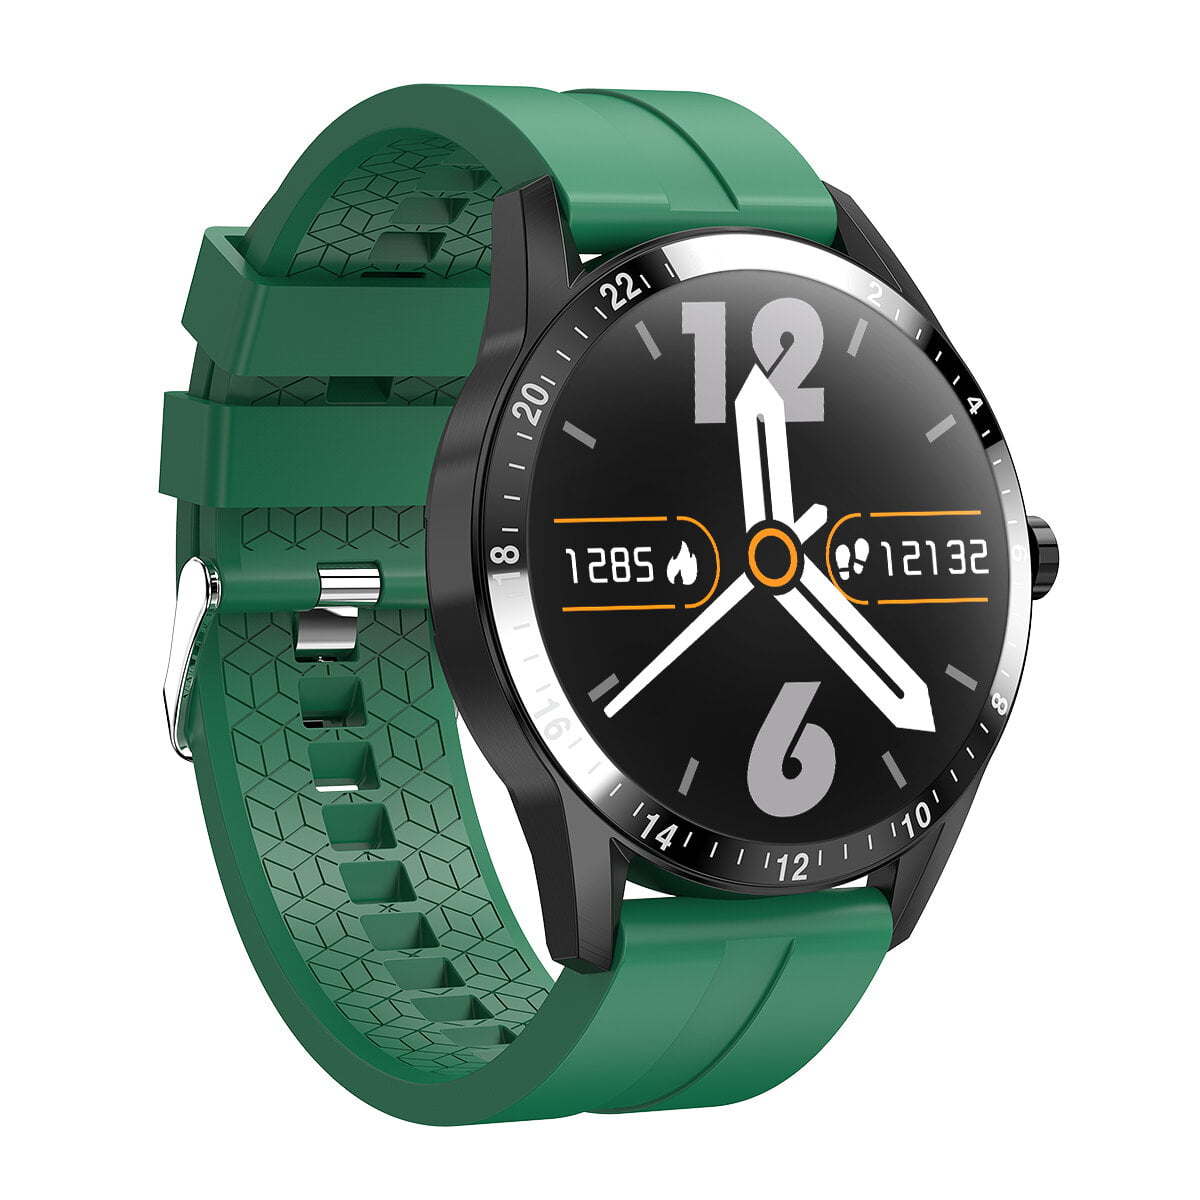 Bakeey smartwatch G20 Smart Watch heart rate blood pressure monitor ip67 smart watch wholesale (3)